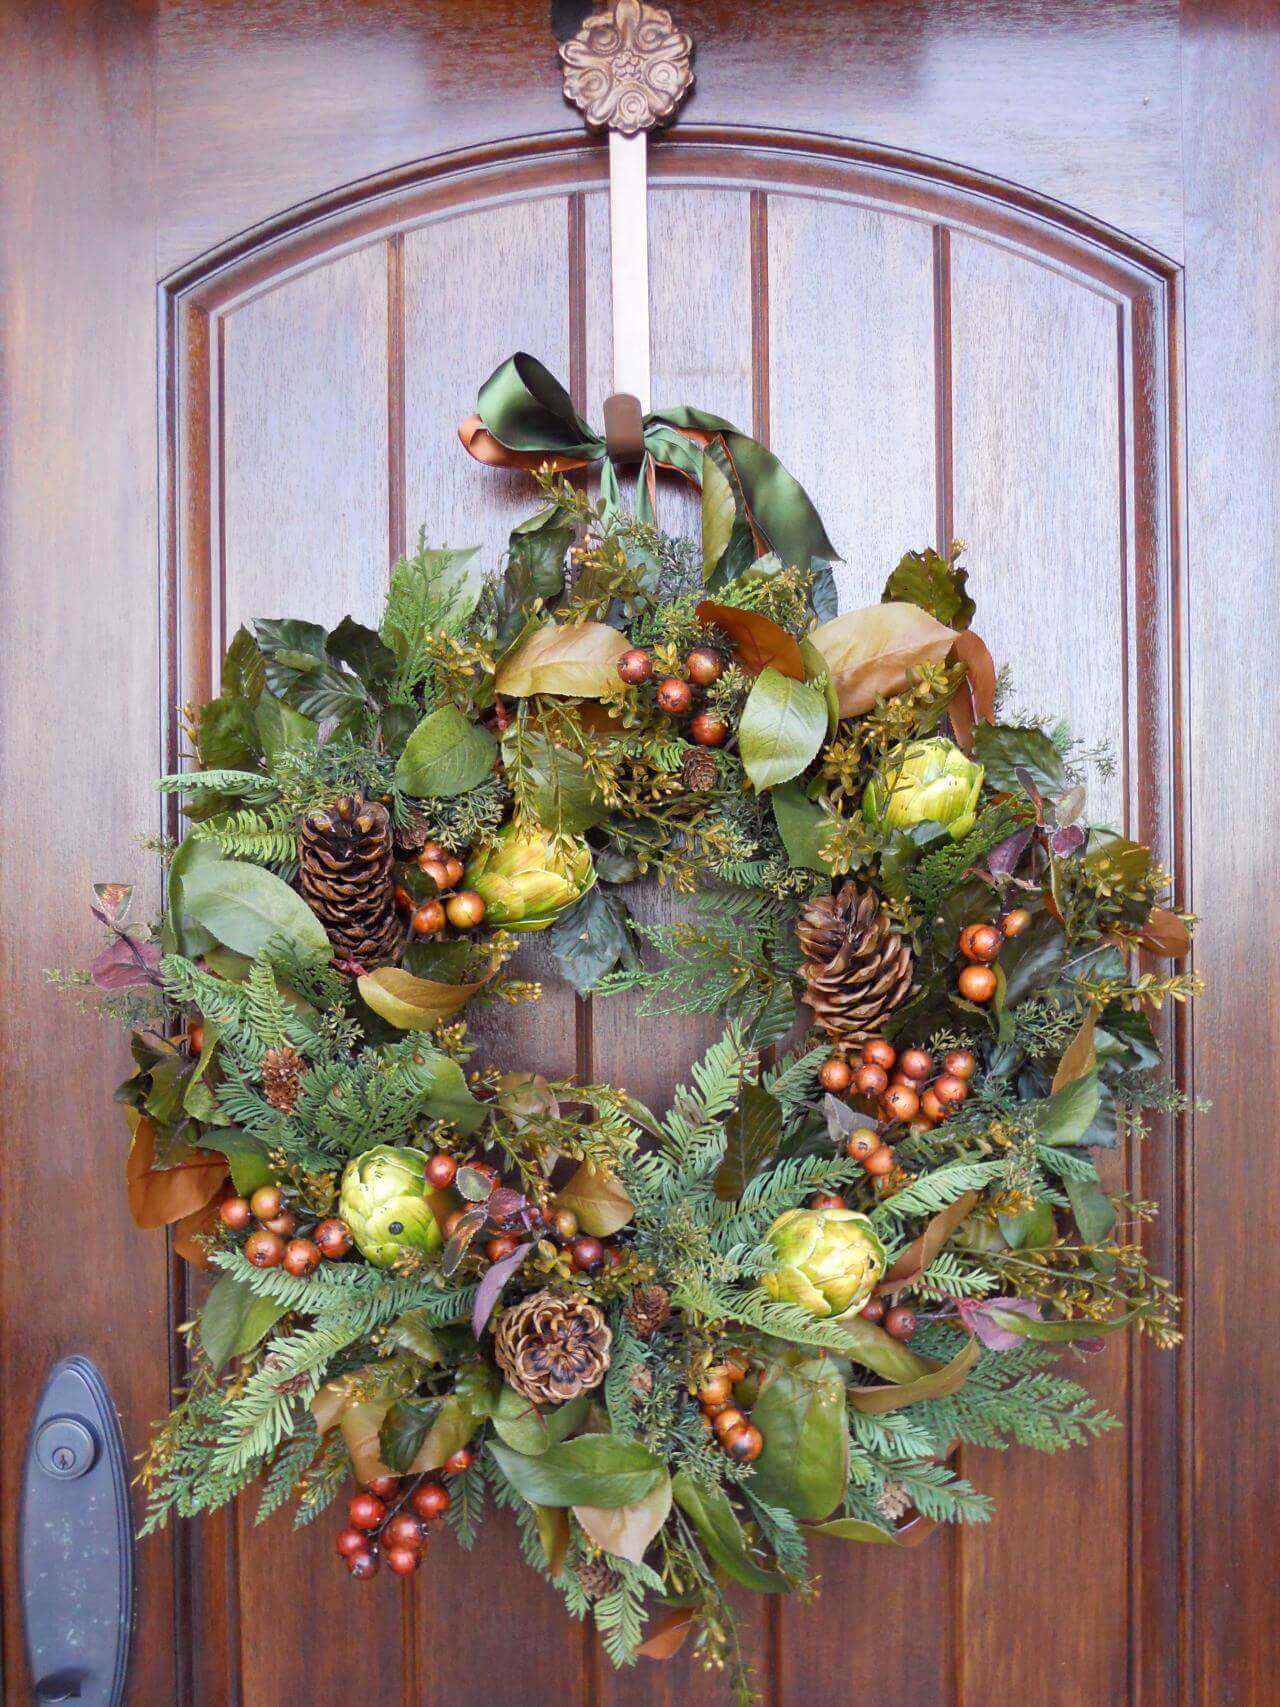 Go green in thanksgiving wreath ideas